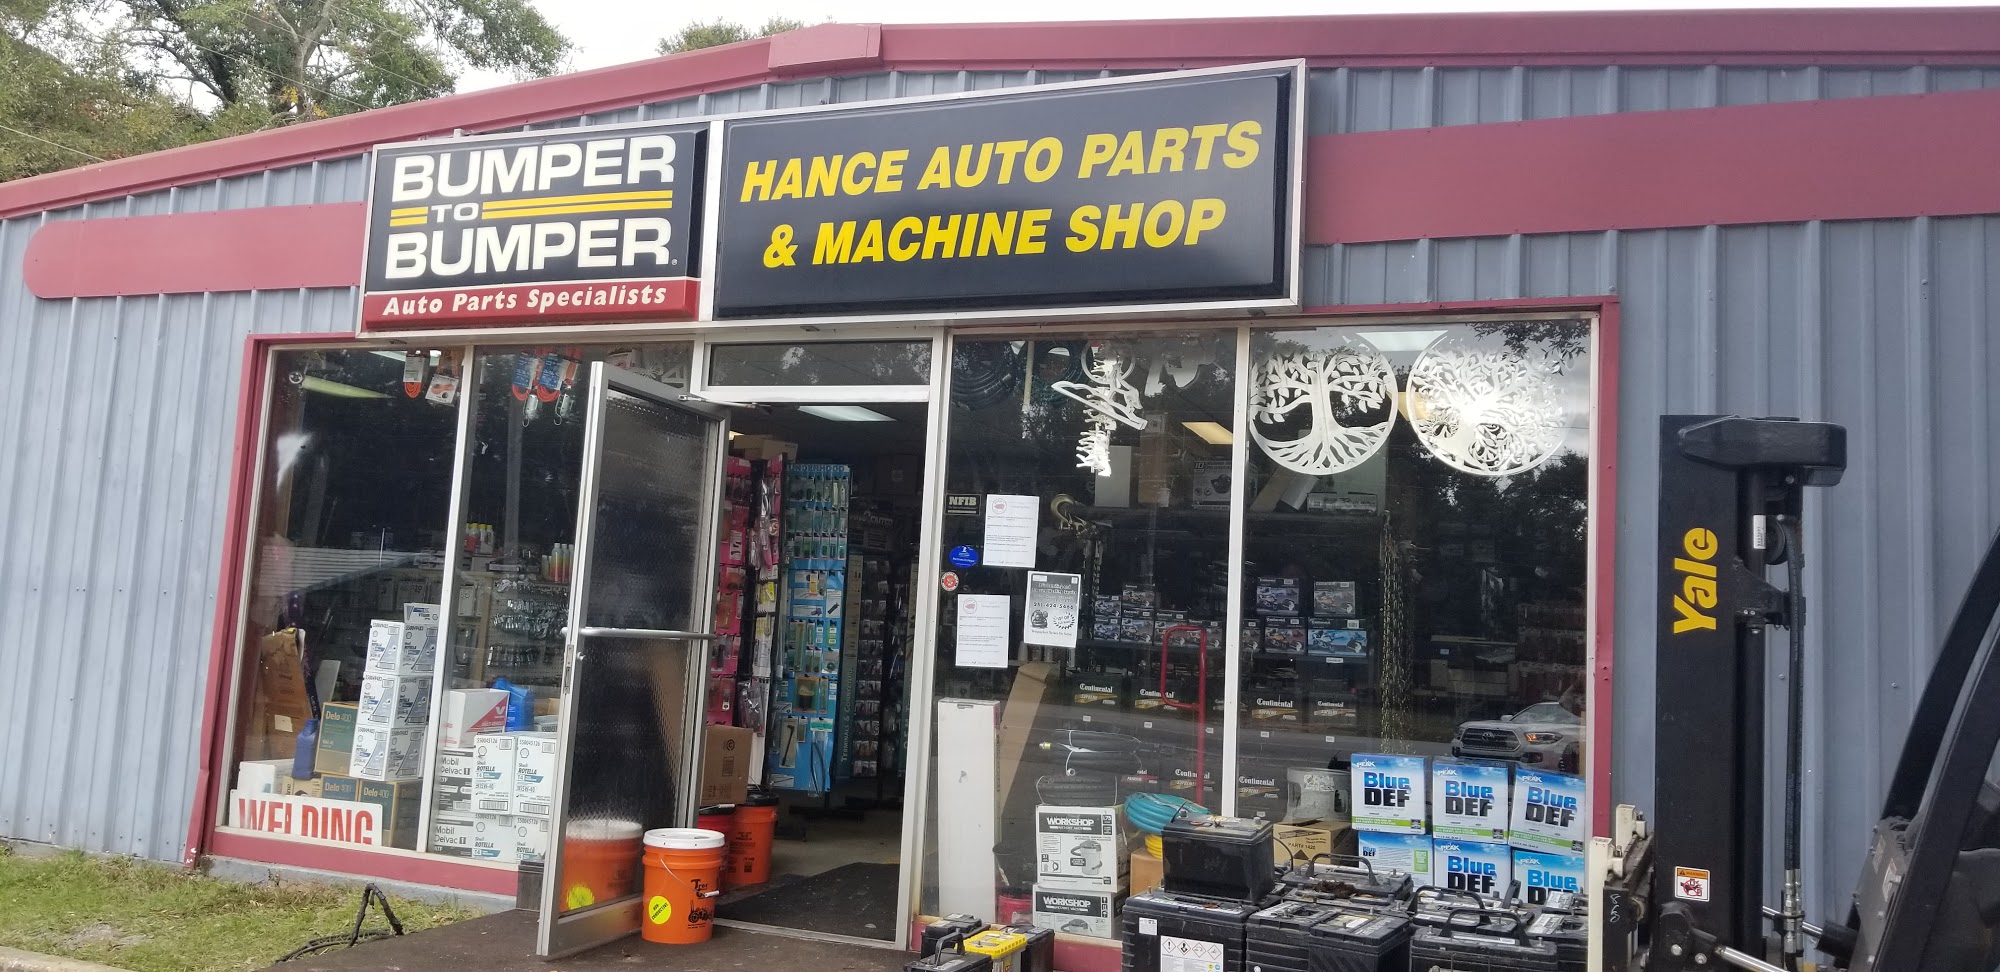 Hance Auto Parts Bumper to Bumper